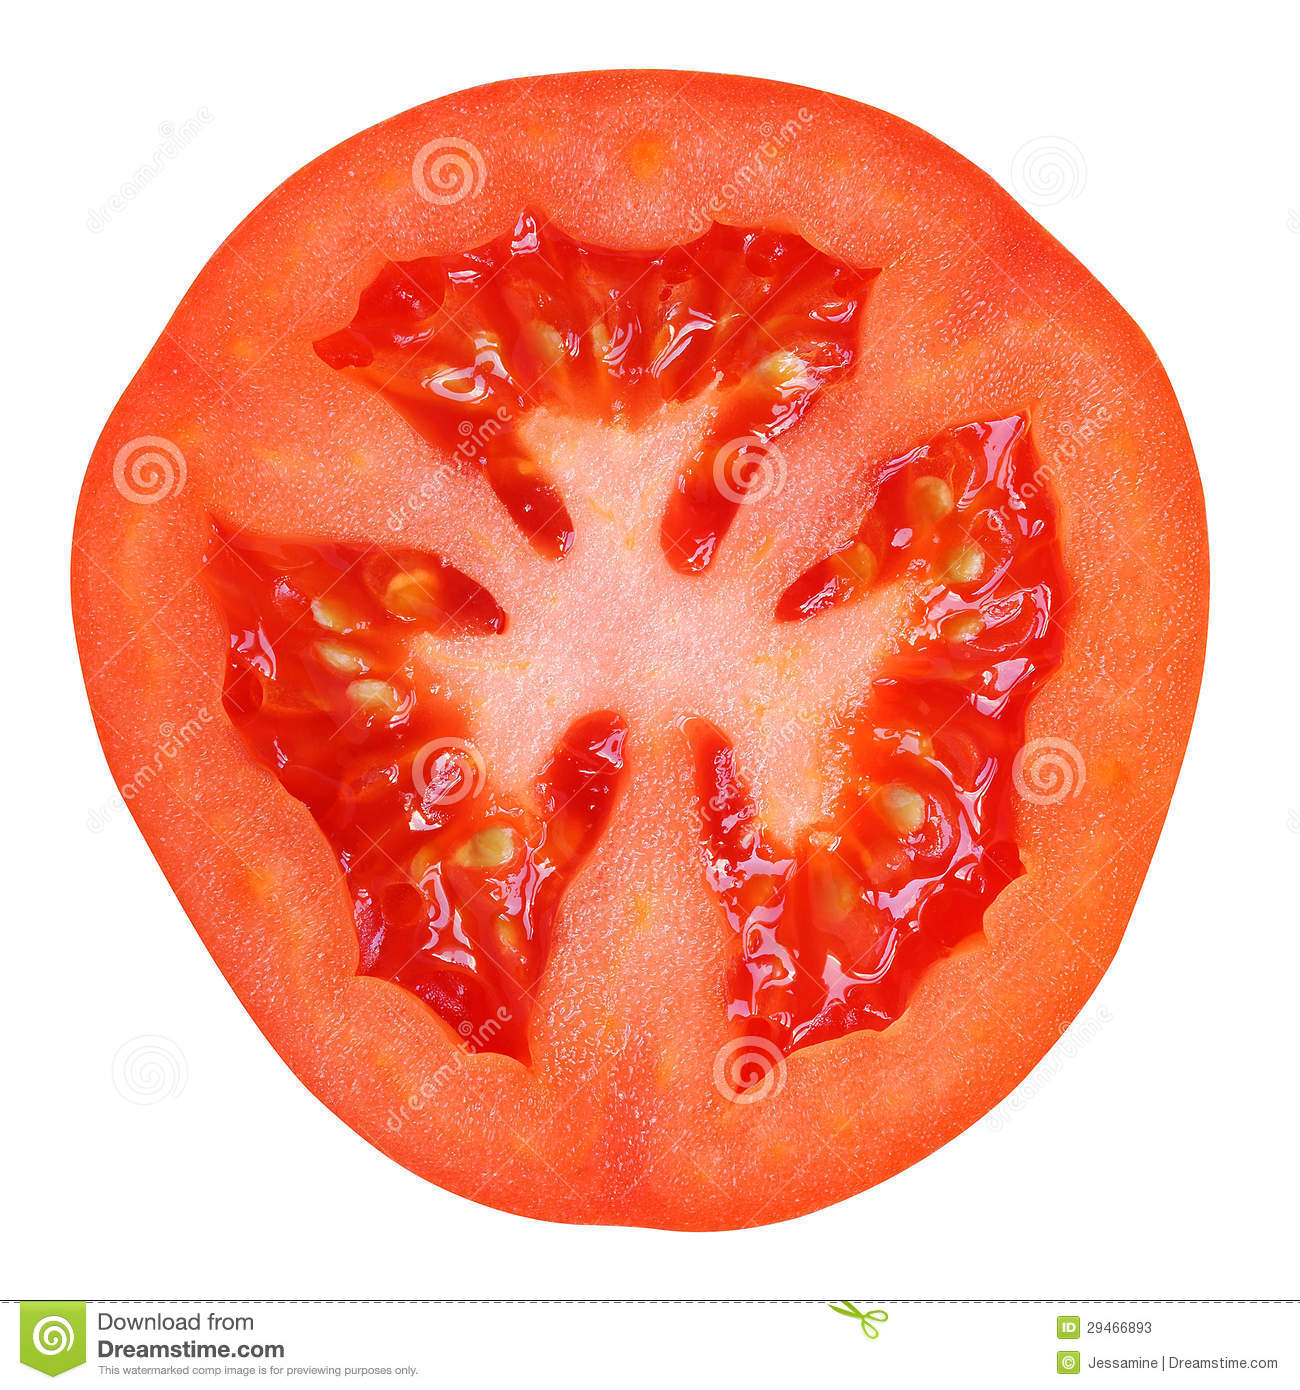 Tomato Slice Stock Photos   Image  29466893